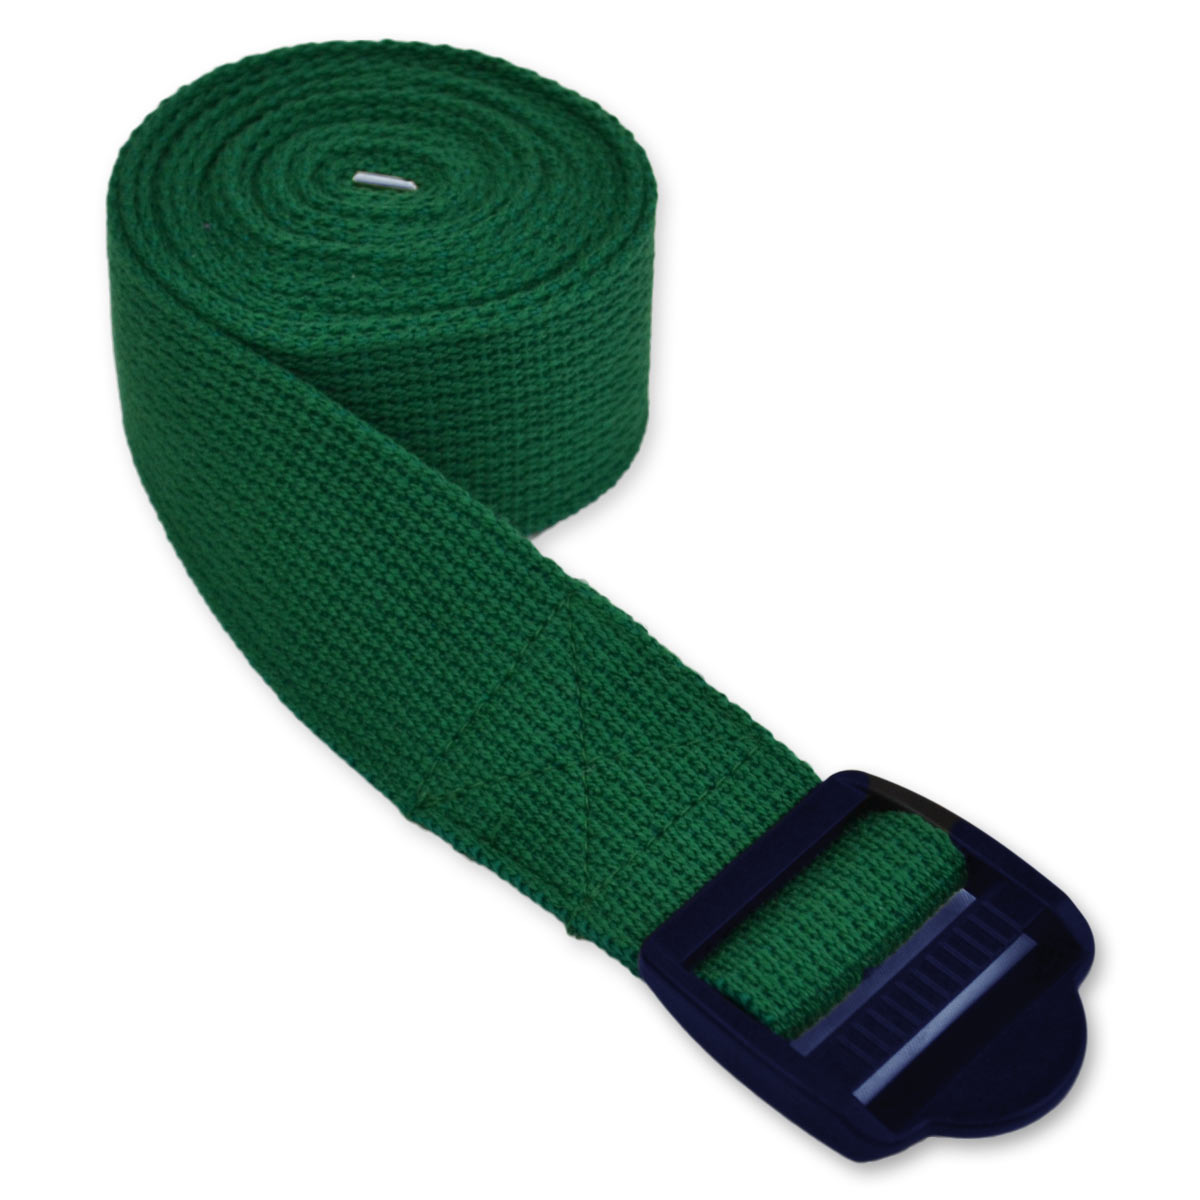 Yoga - Simple Days - YOGA Cotton Belt - Cinto de Yoga - Dark Green